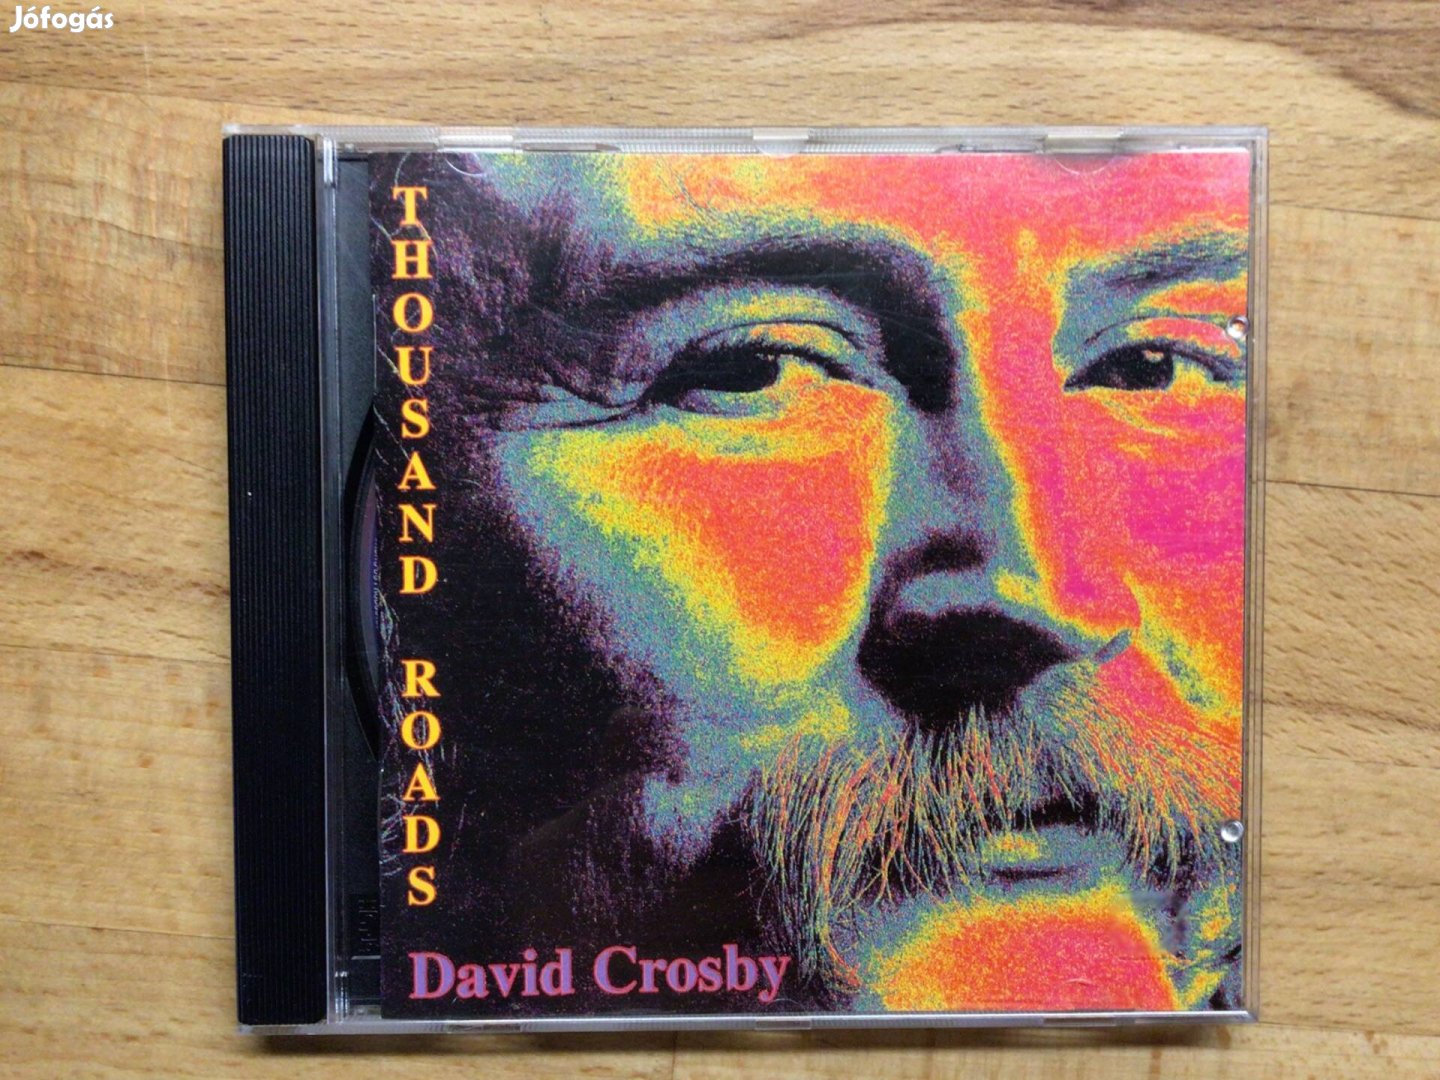 David Crosby - Thousand Roads, cd lemez